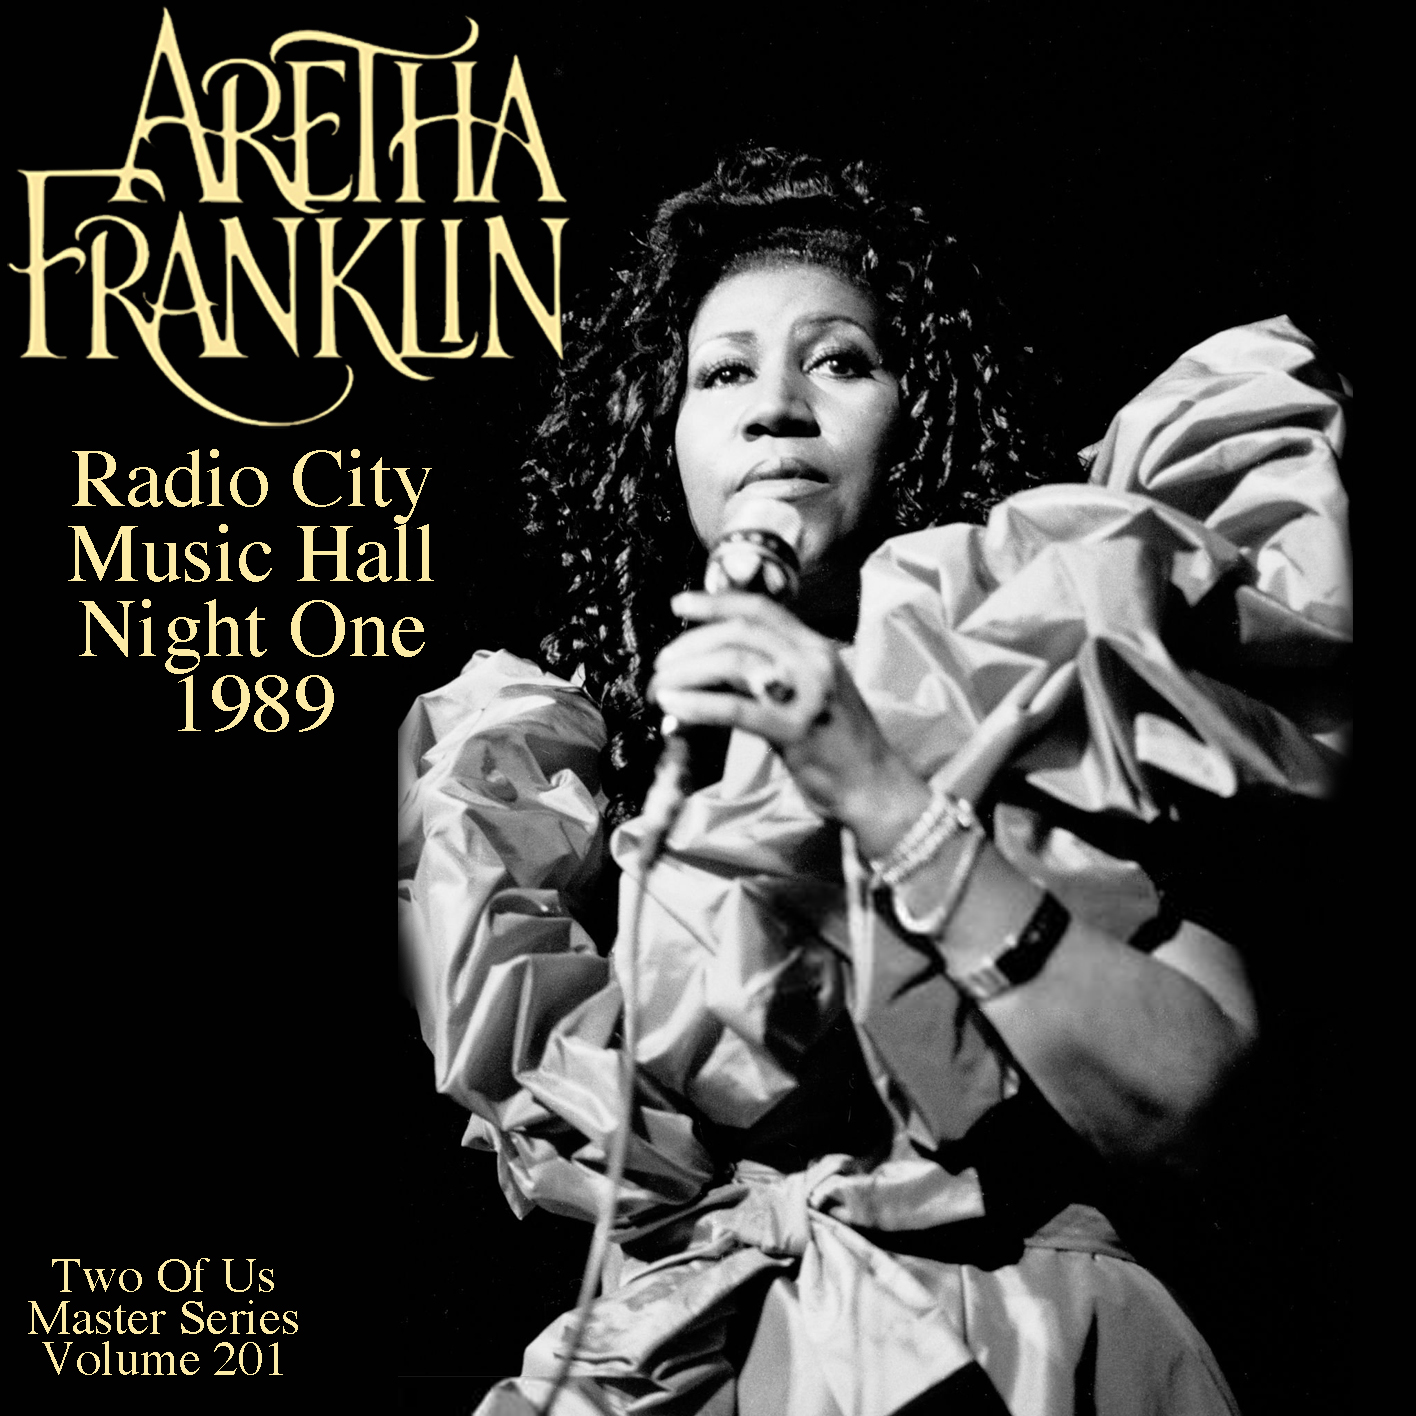 ArethaFranklin1989-07-05RadioCityMusicHallNYC (2).jpg